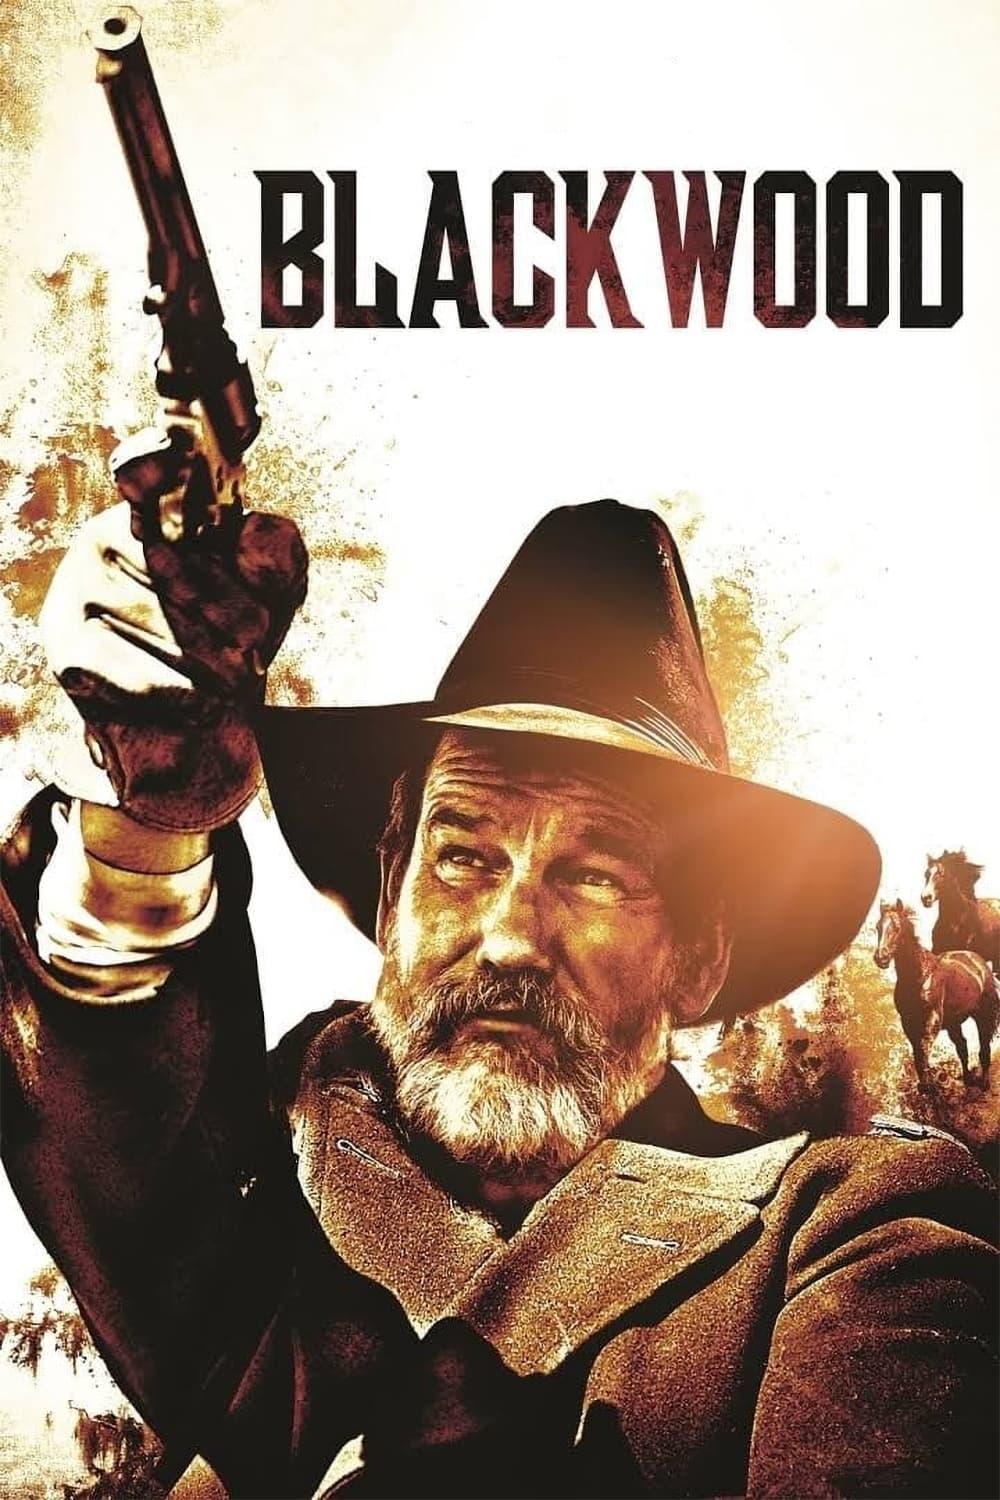 Blackwood poster